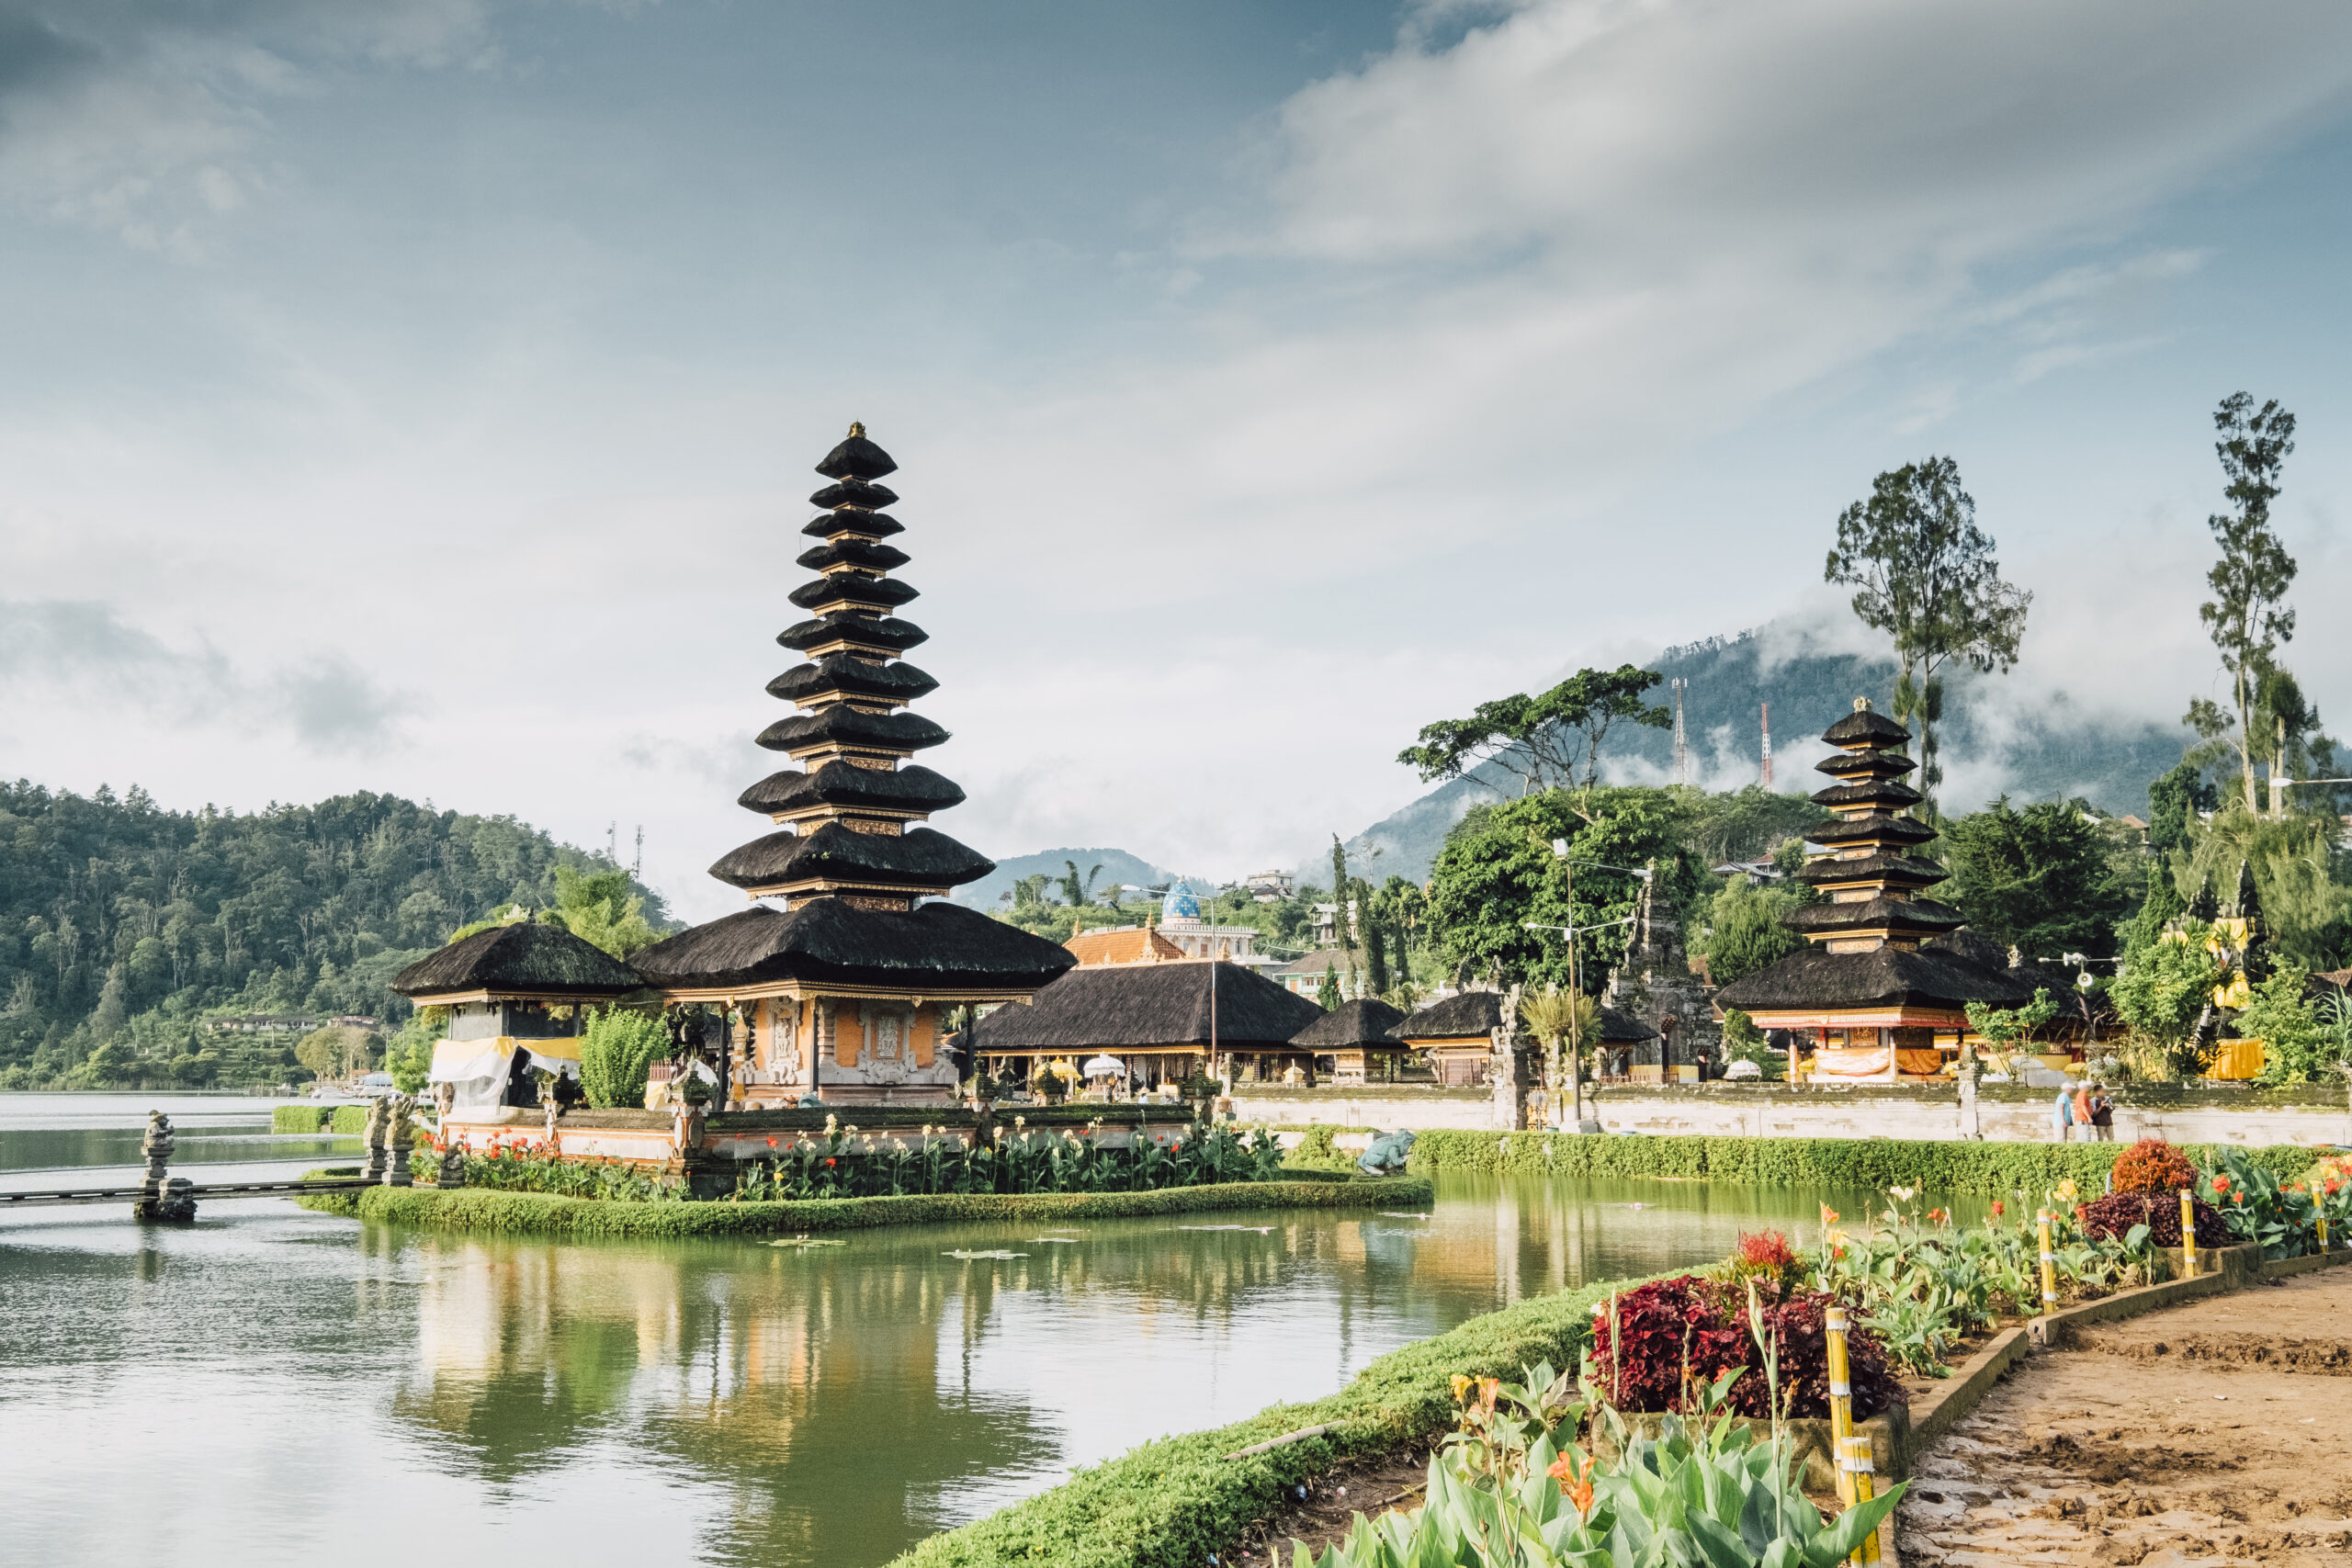 Ubud, Bali’s cultural hub